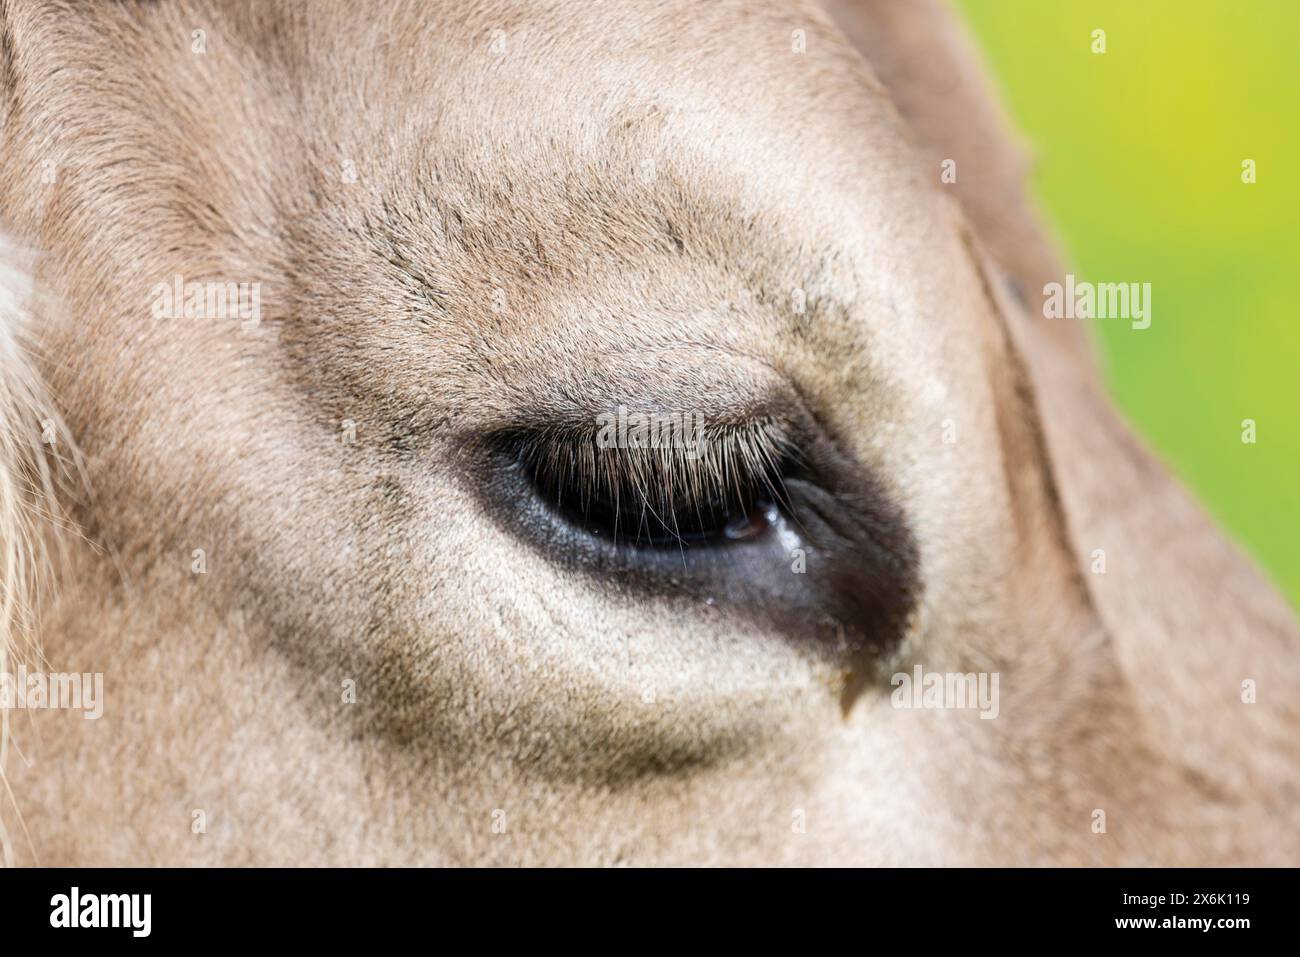 Eye of a cow, Allgaeuer Braunvieh, domestic cattle breed (Bos primigenius taurus), Allgaeu, Bavaria, Germany Stock Photo